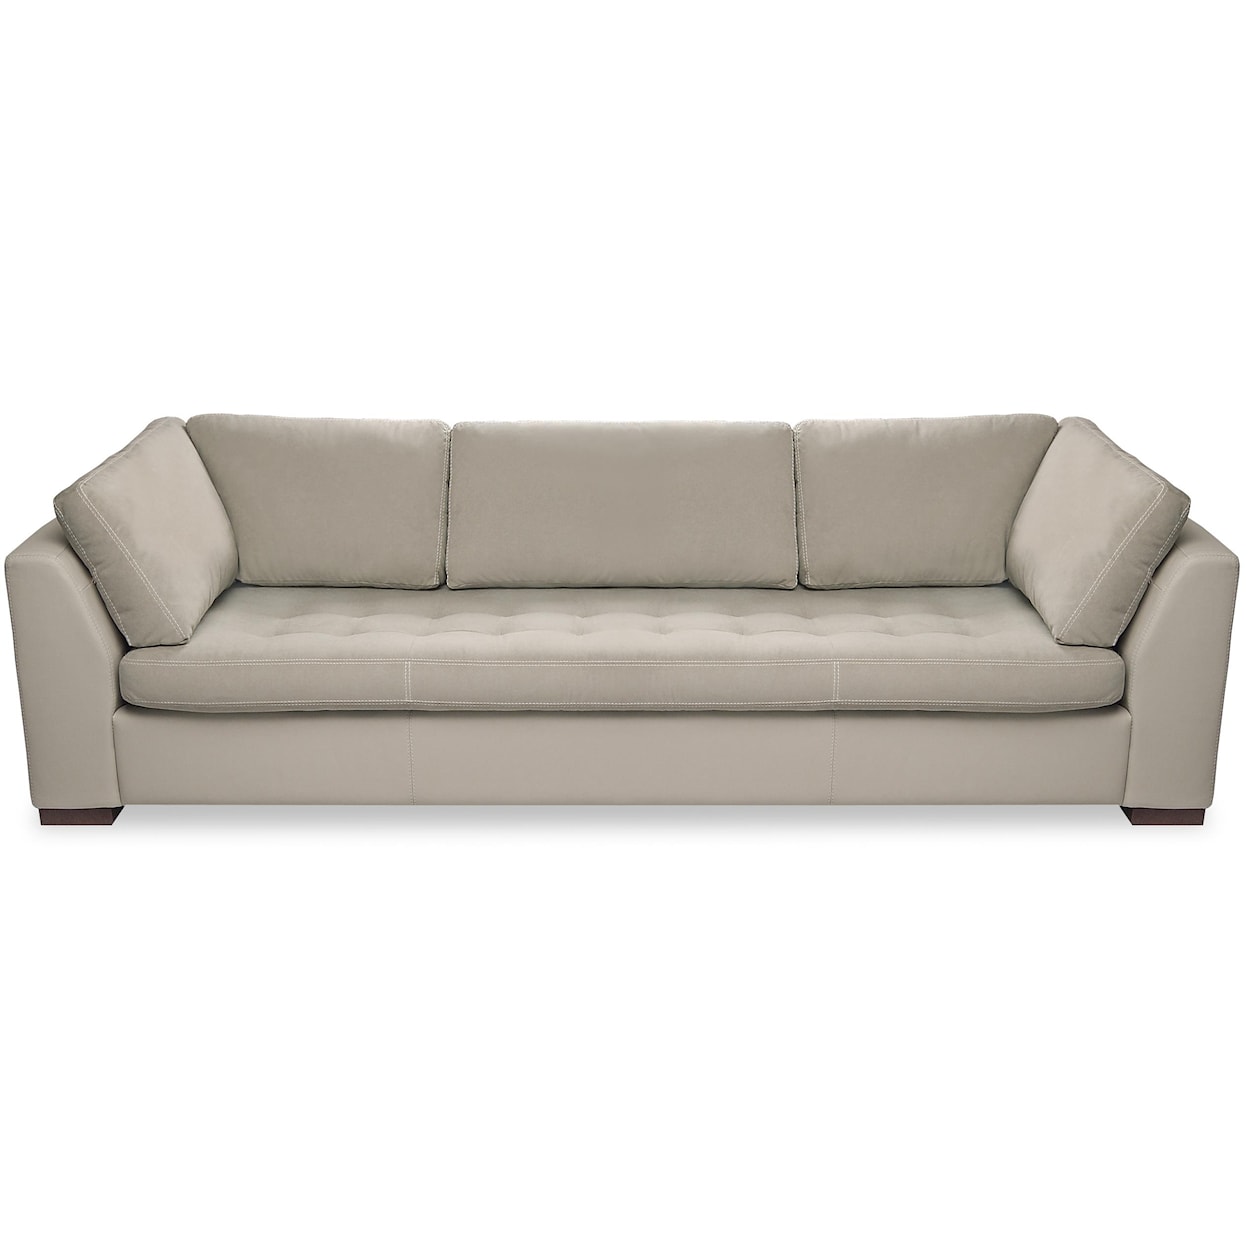 American Leather Astoria Sofa